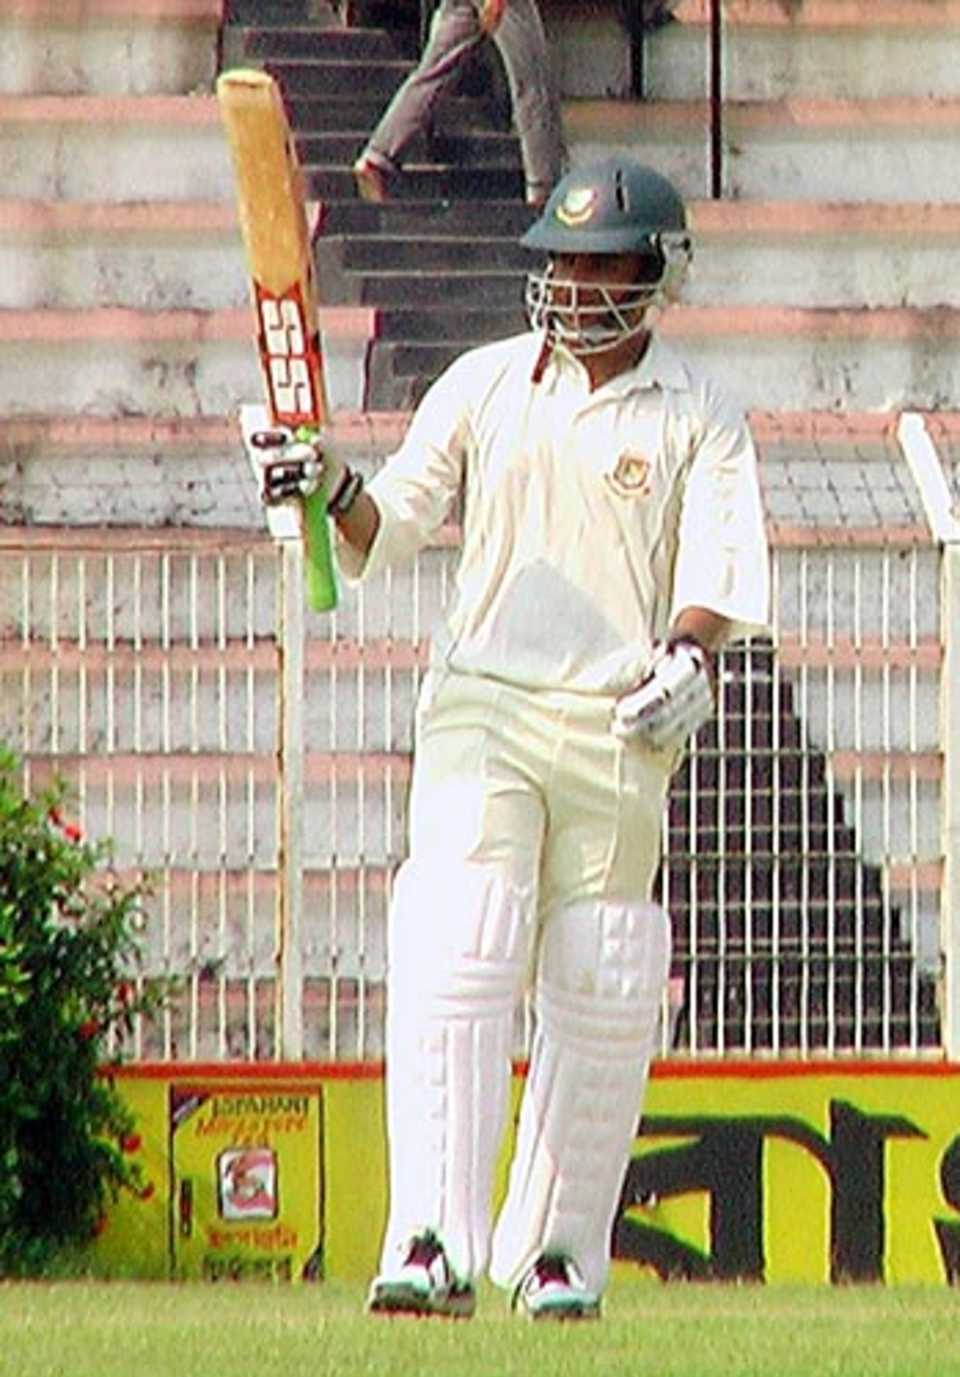 Chittagong opener Tamim Iqbal raises his bat after reaching his half century against Barisal, October 21, 2007